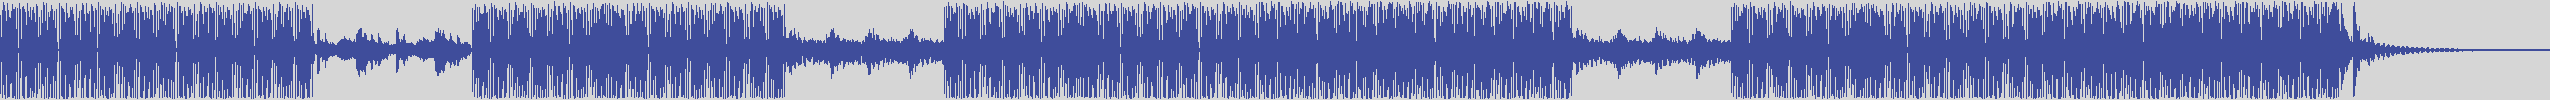 nf_boyz_records [NFY089] Domshe - Domshe [Tokyo Mix] audio wave form